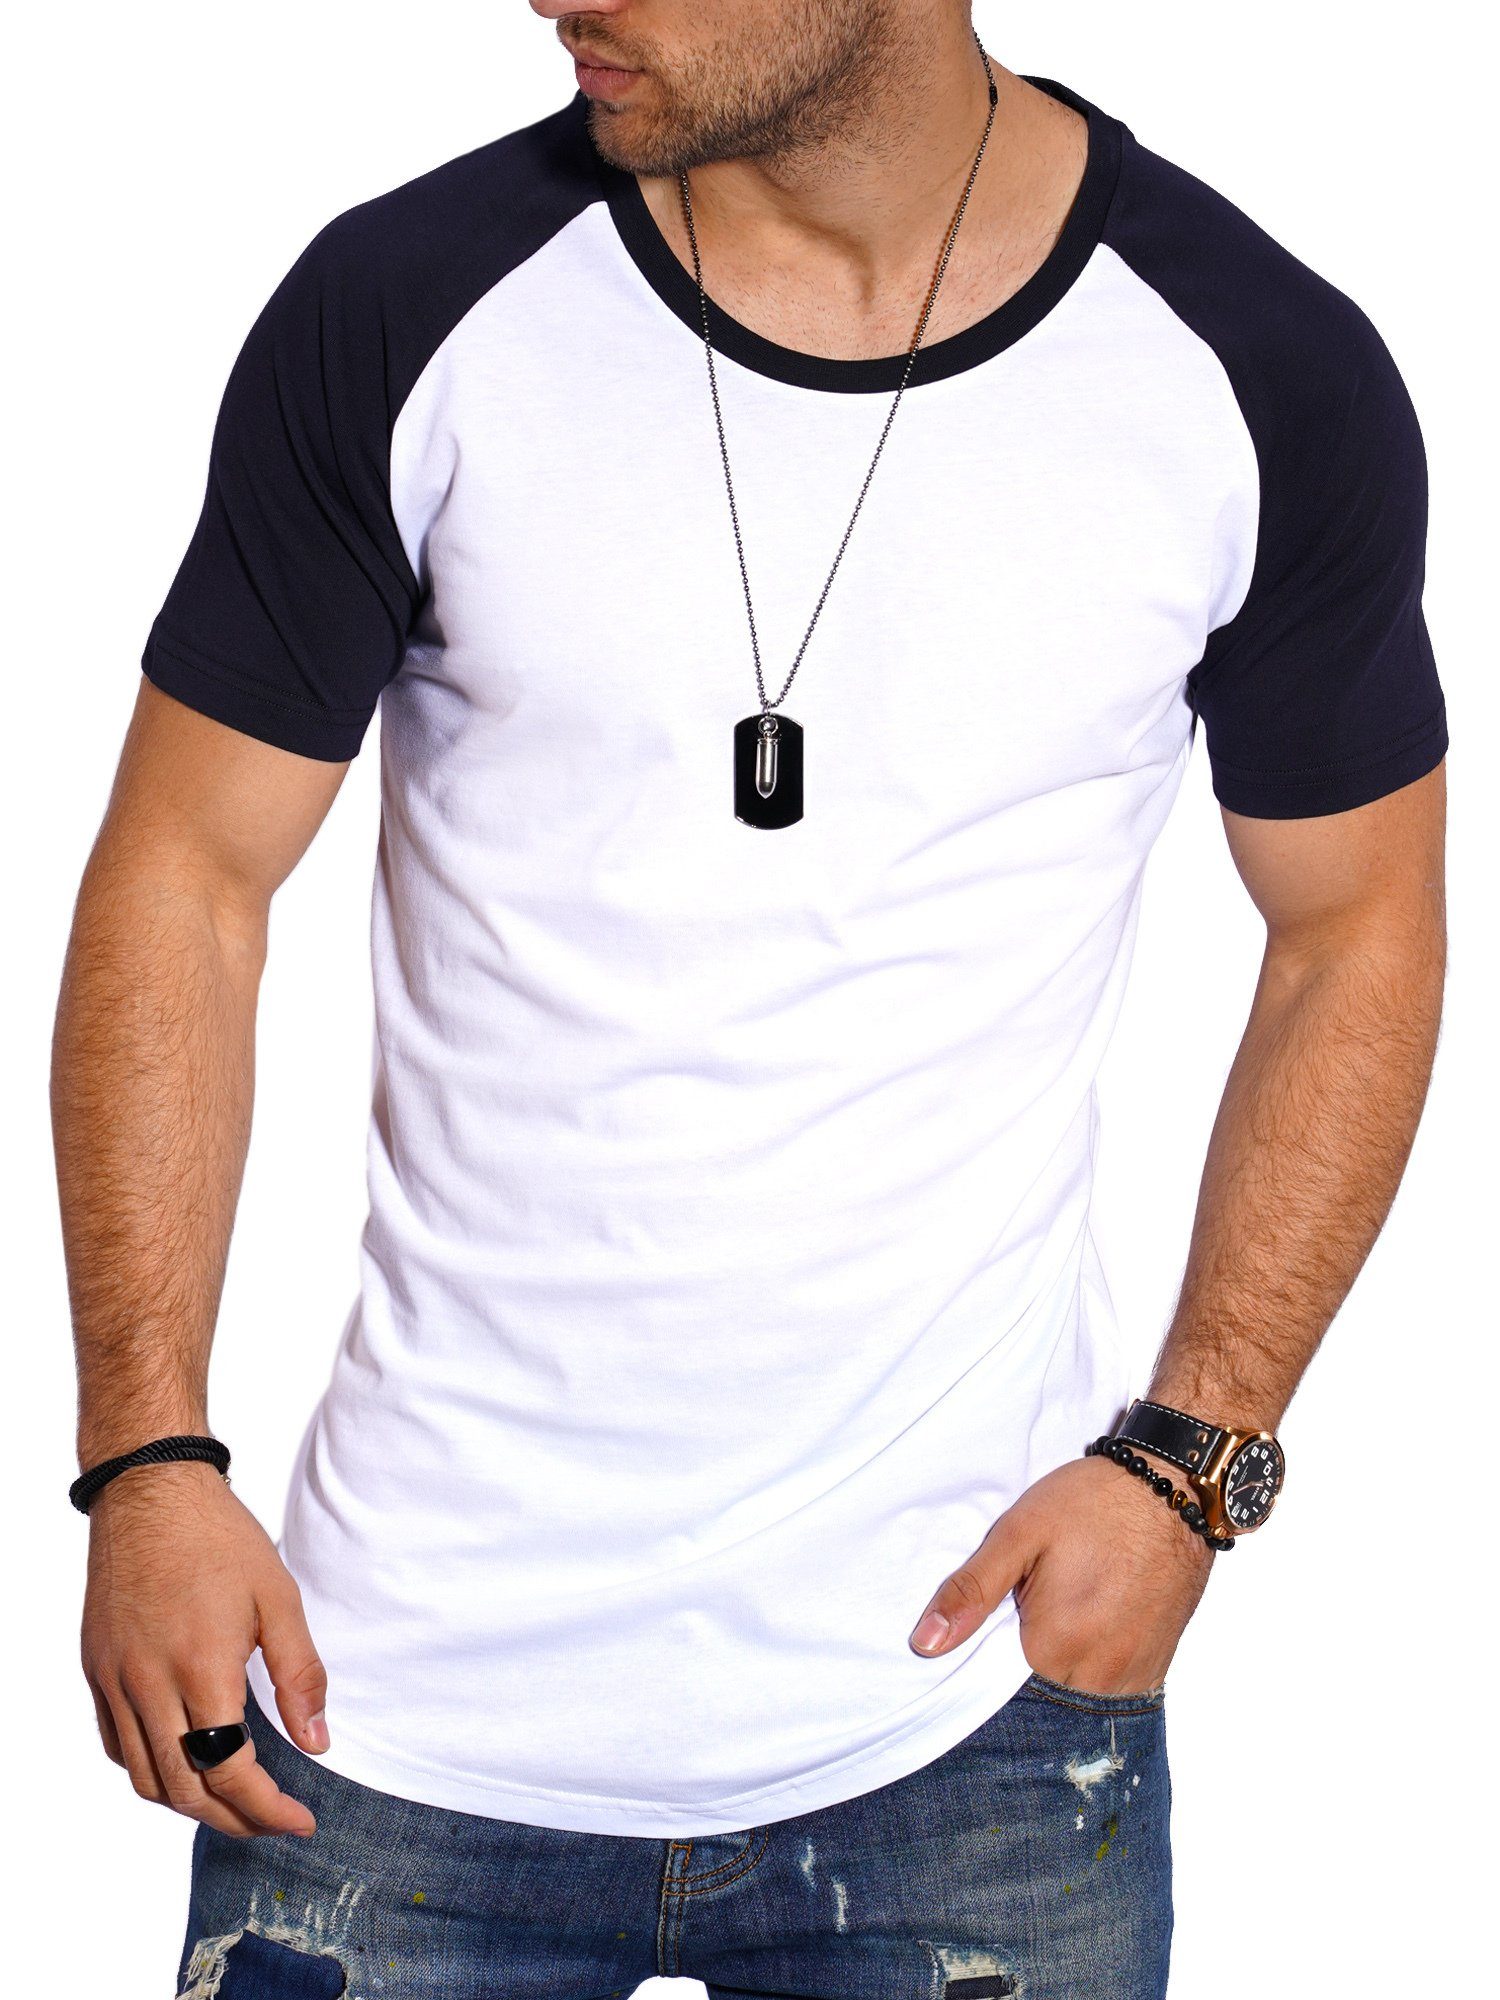 Style-Division im Basic Weiß-Navy T-Shirt Raglan-Stil SDBOISE